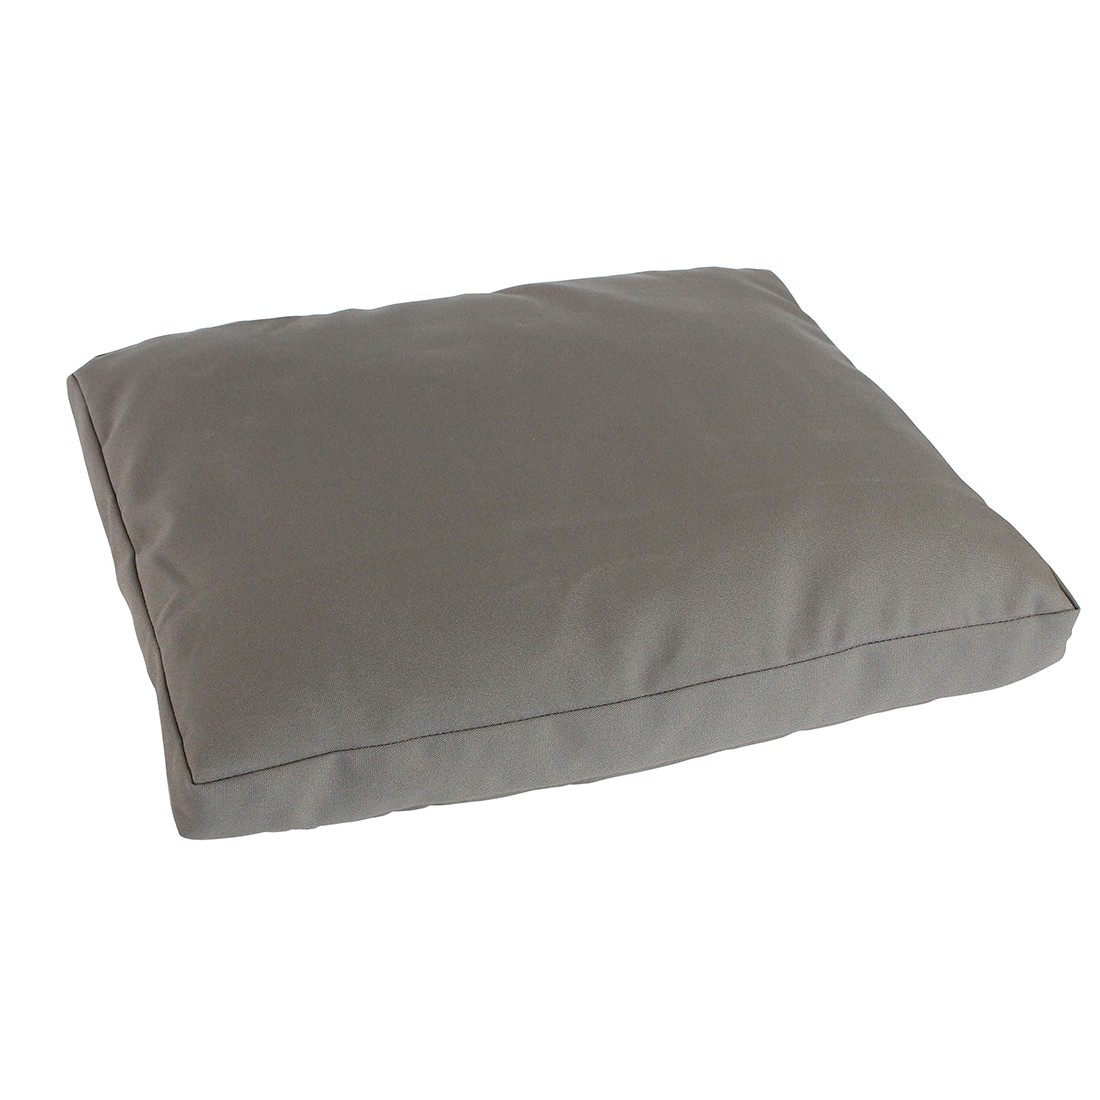 water repellent pillow for 9260 s rectangular